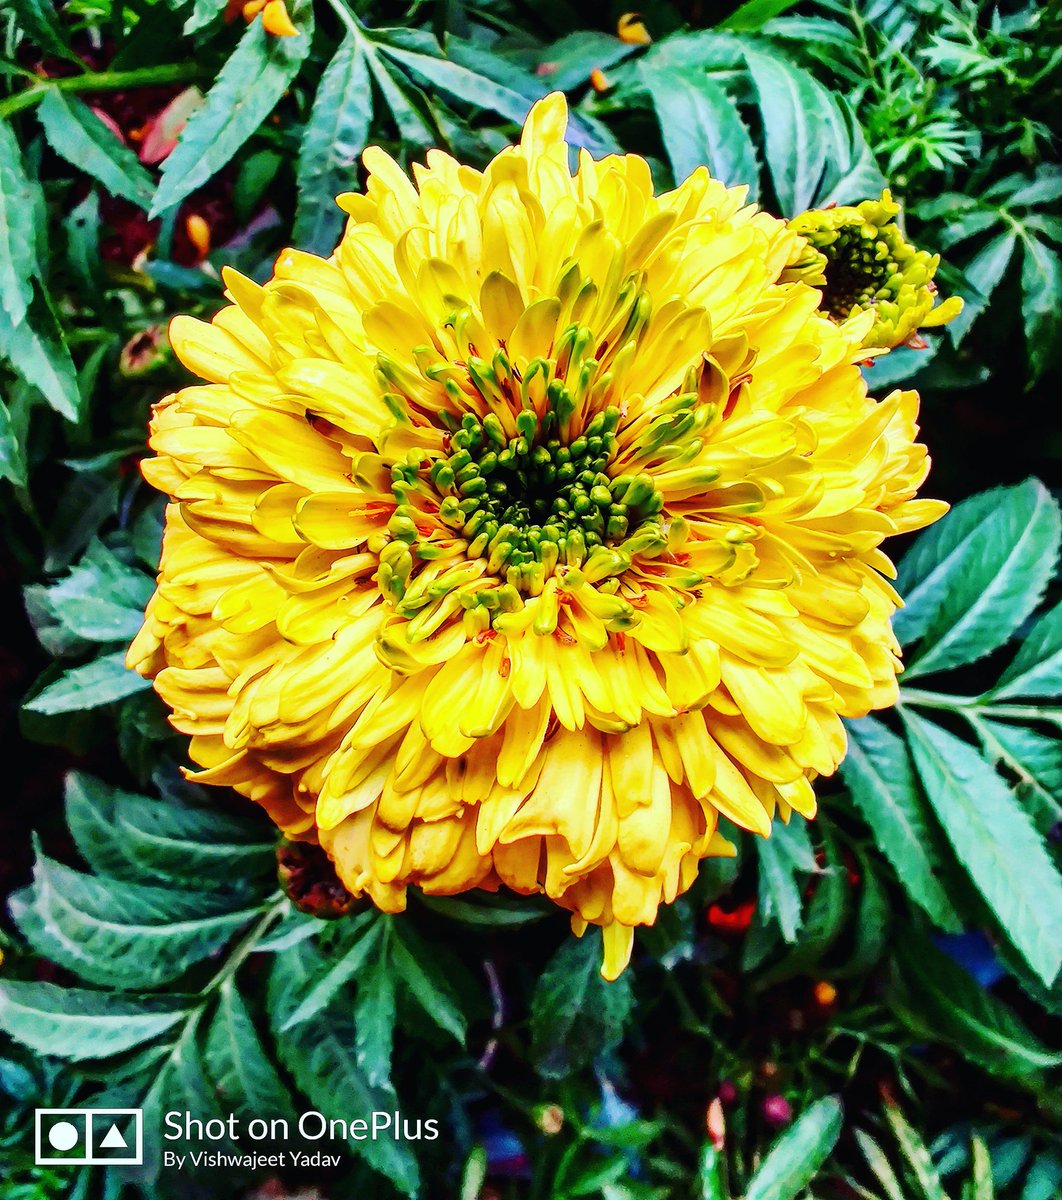 #Shotononeplus7t #Love #Mittikhusbooki #morningclick #yellowvibes #gardening #clickindiaclick